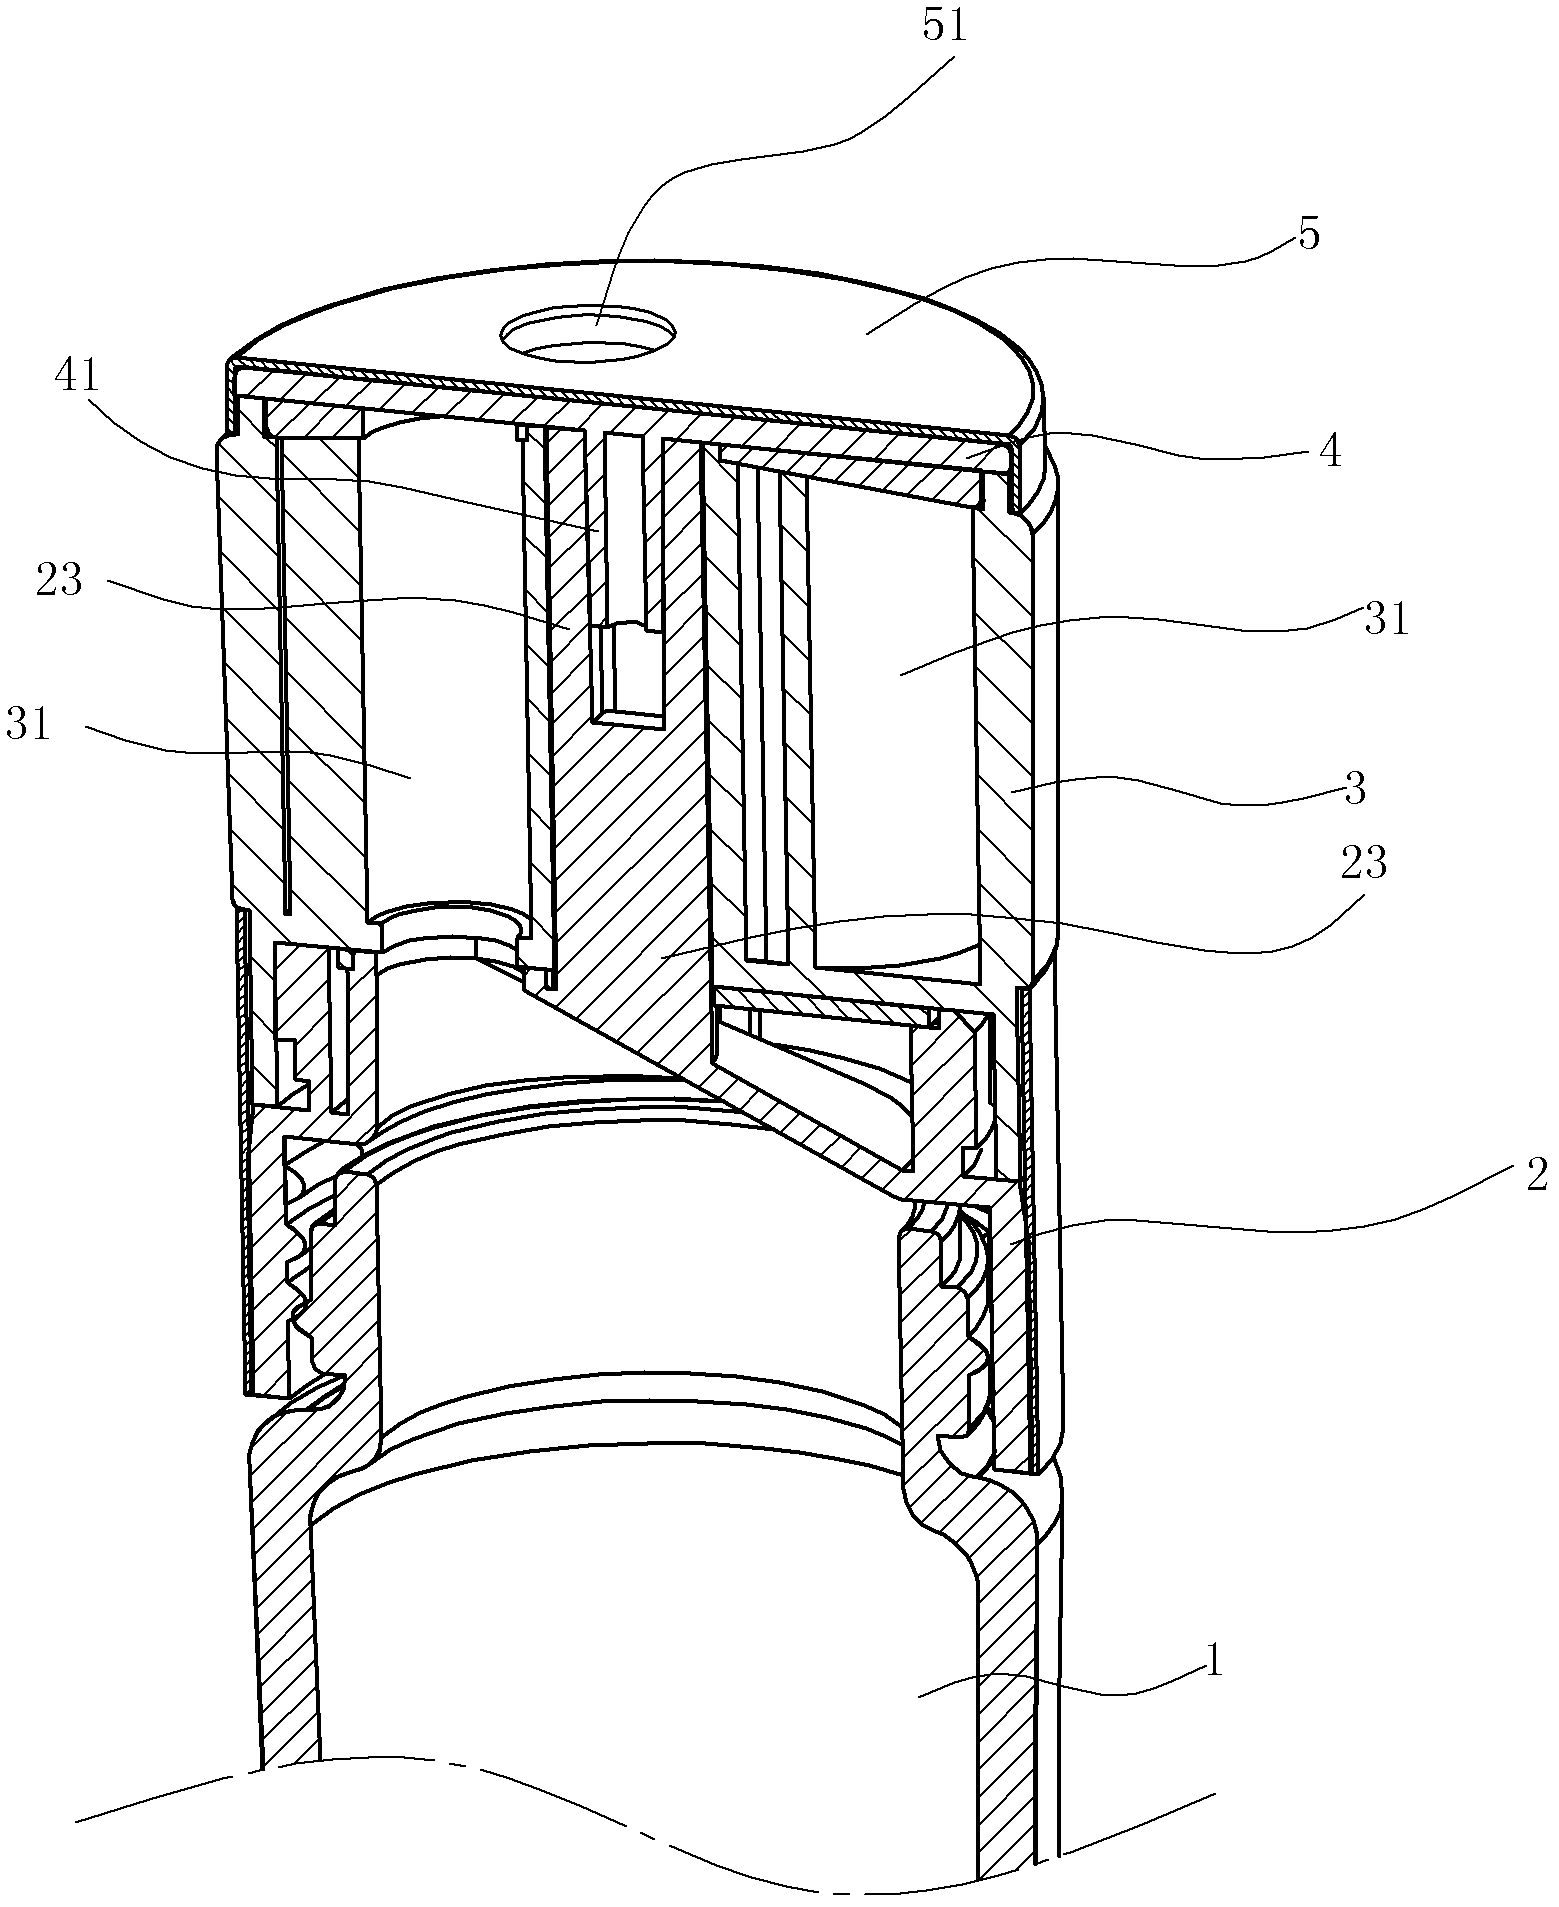 Batchmeter structure